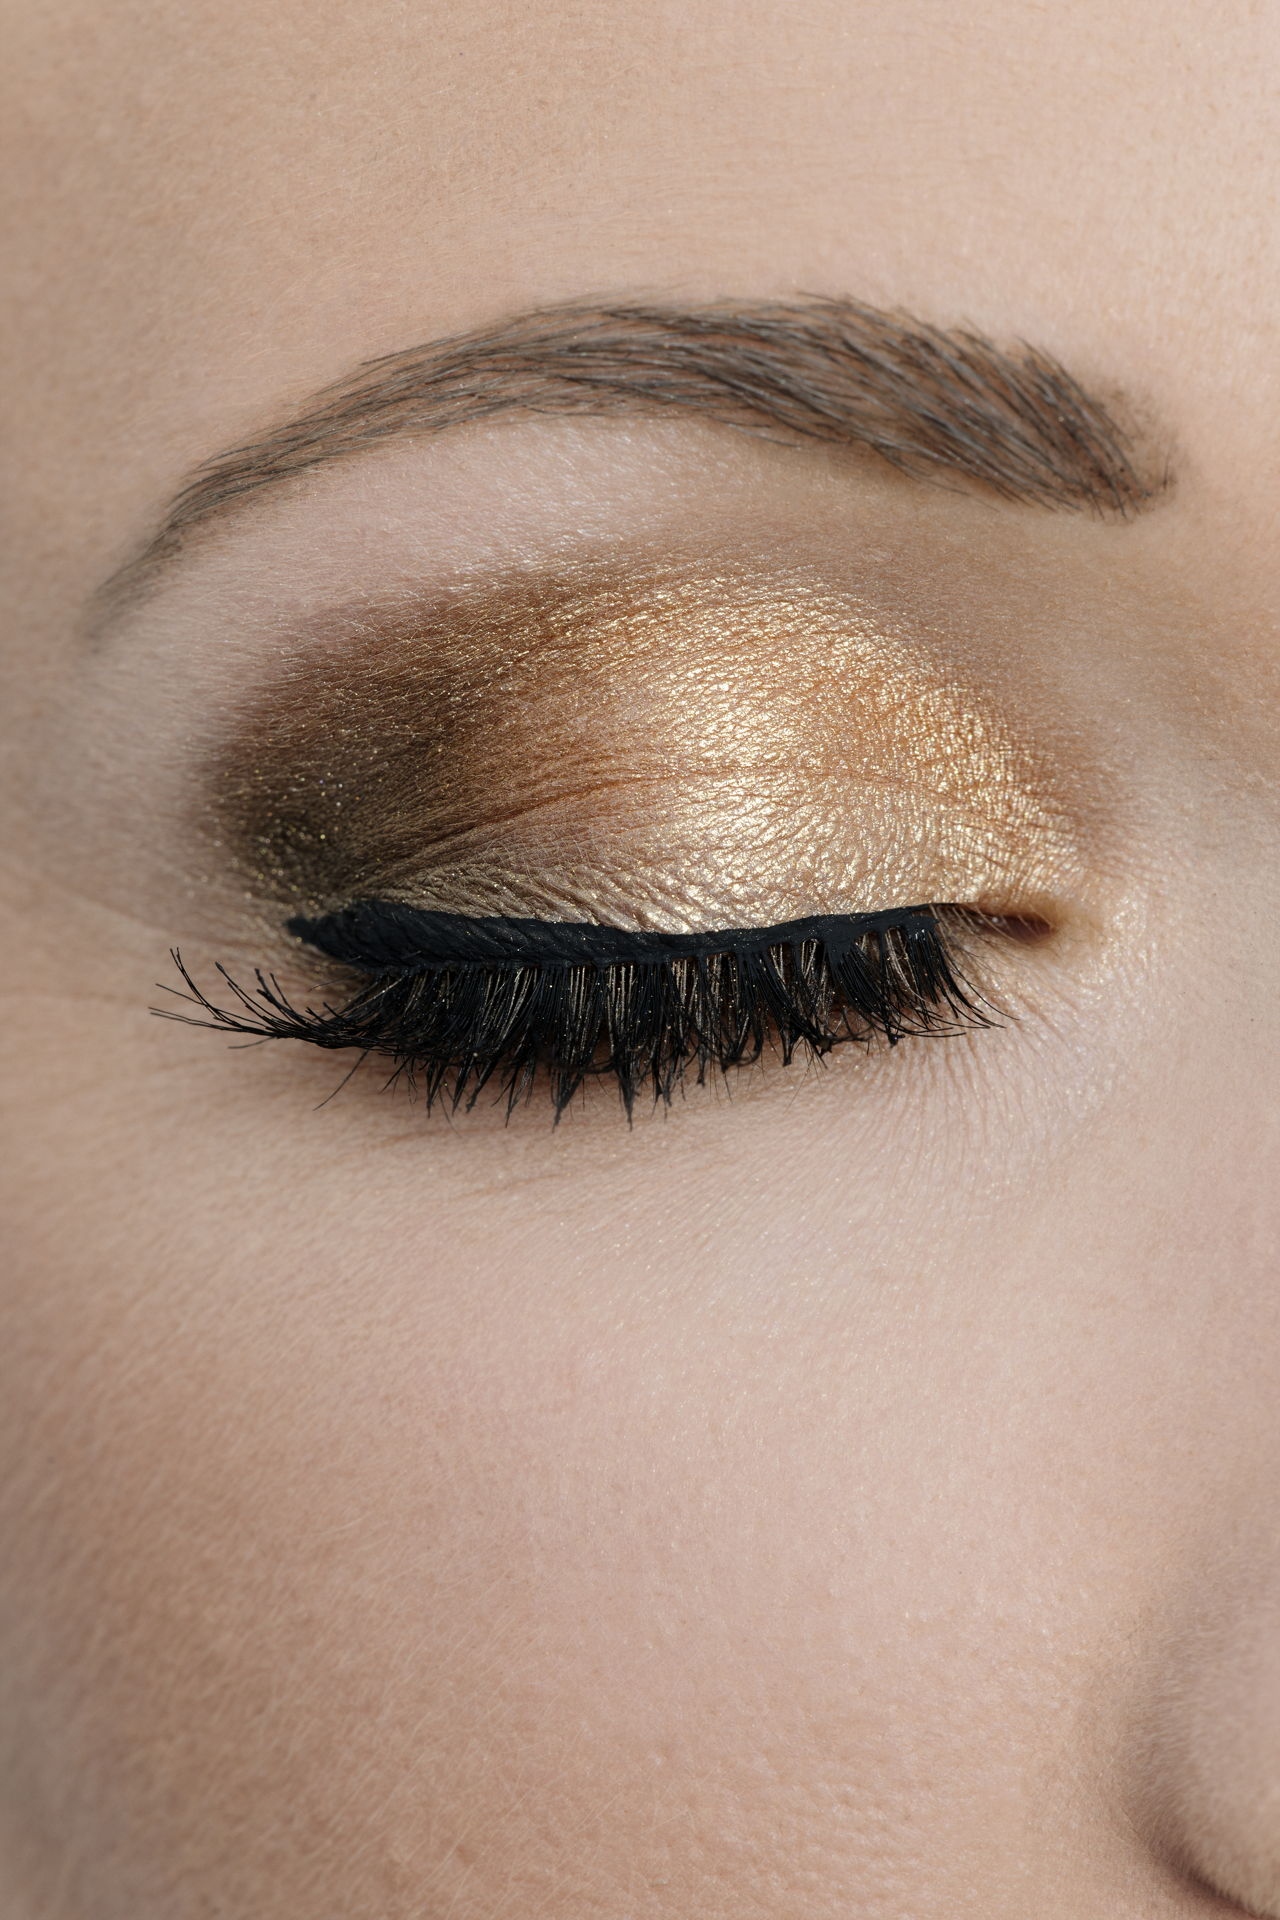 Eye Makeup For Over 50 Tips On Eye Makeup For Women Over 50 To Make Them Look Ravishing